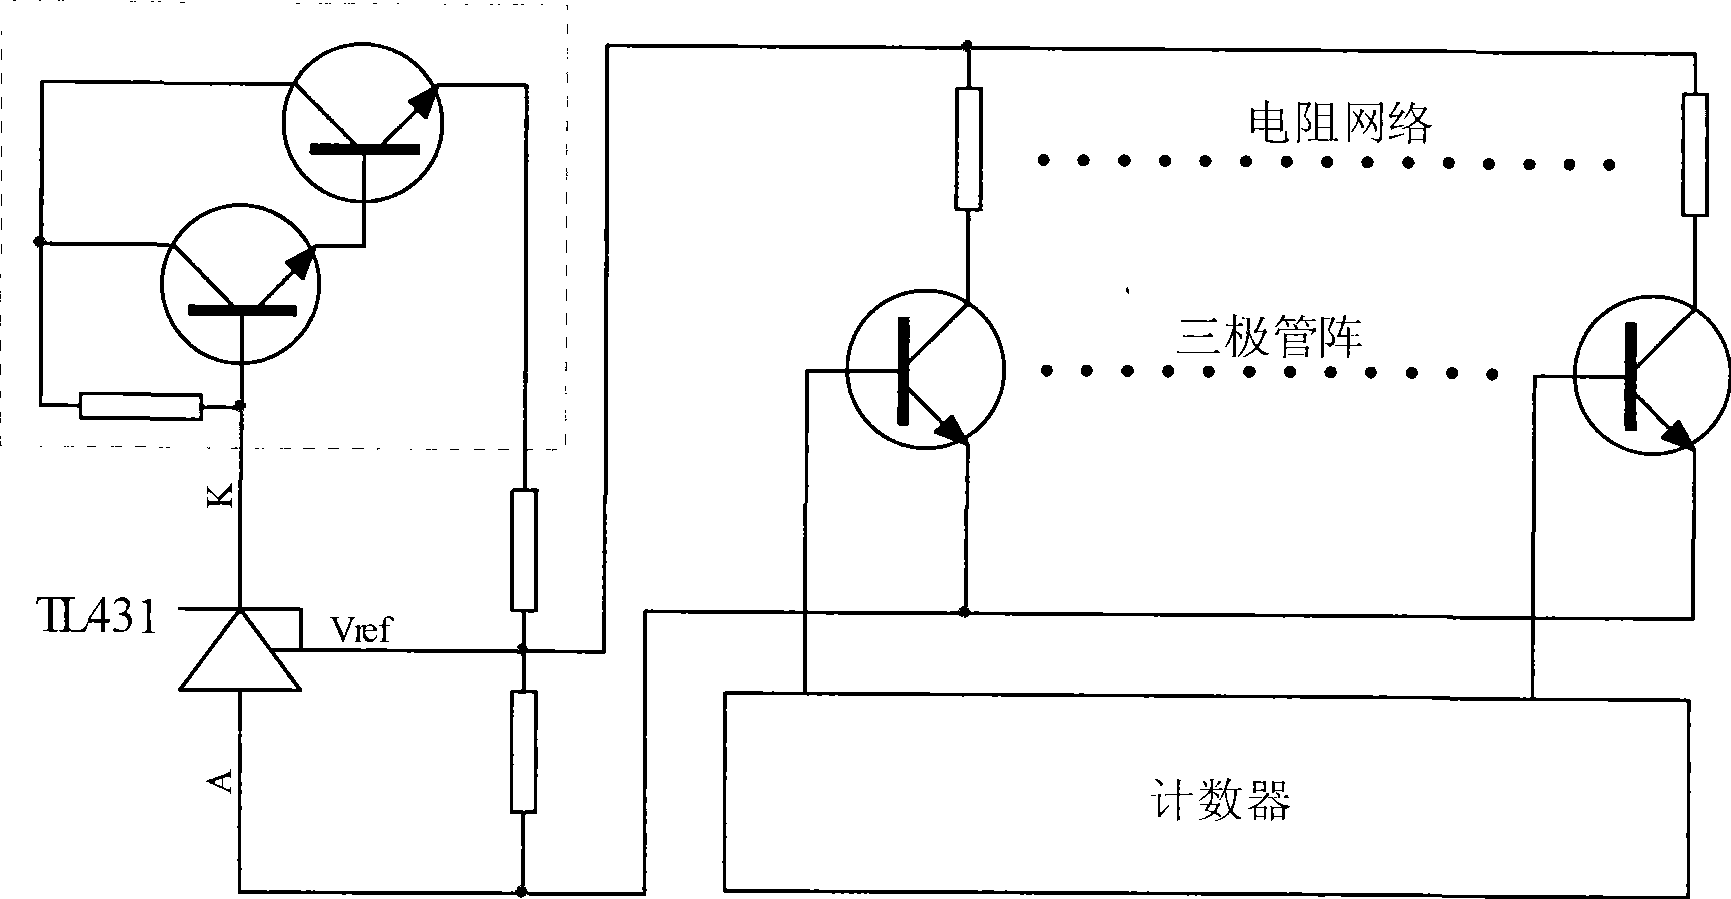 Universal electronic potentiometer module